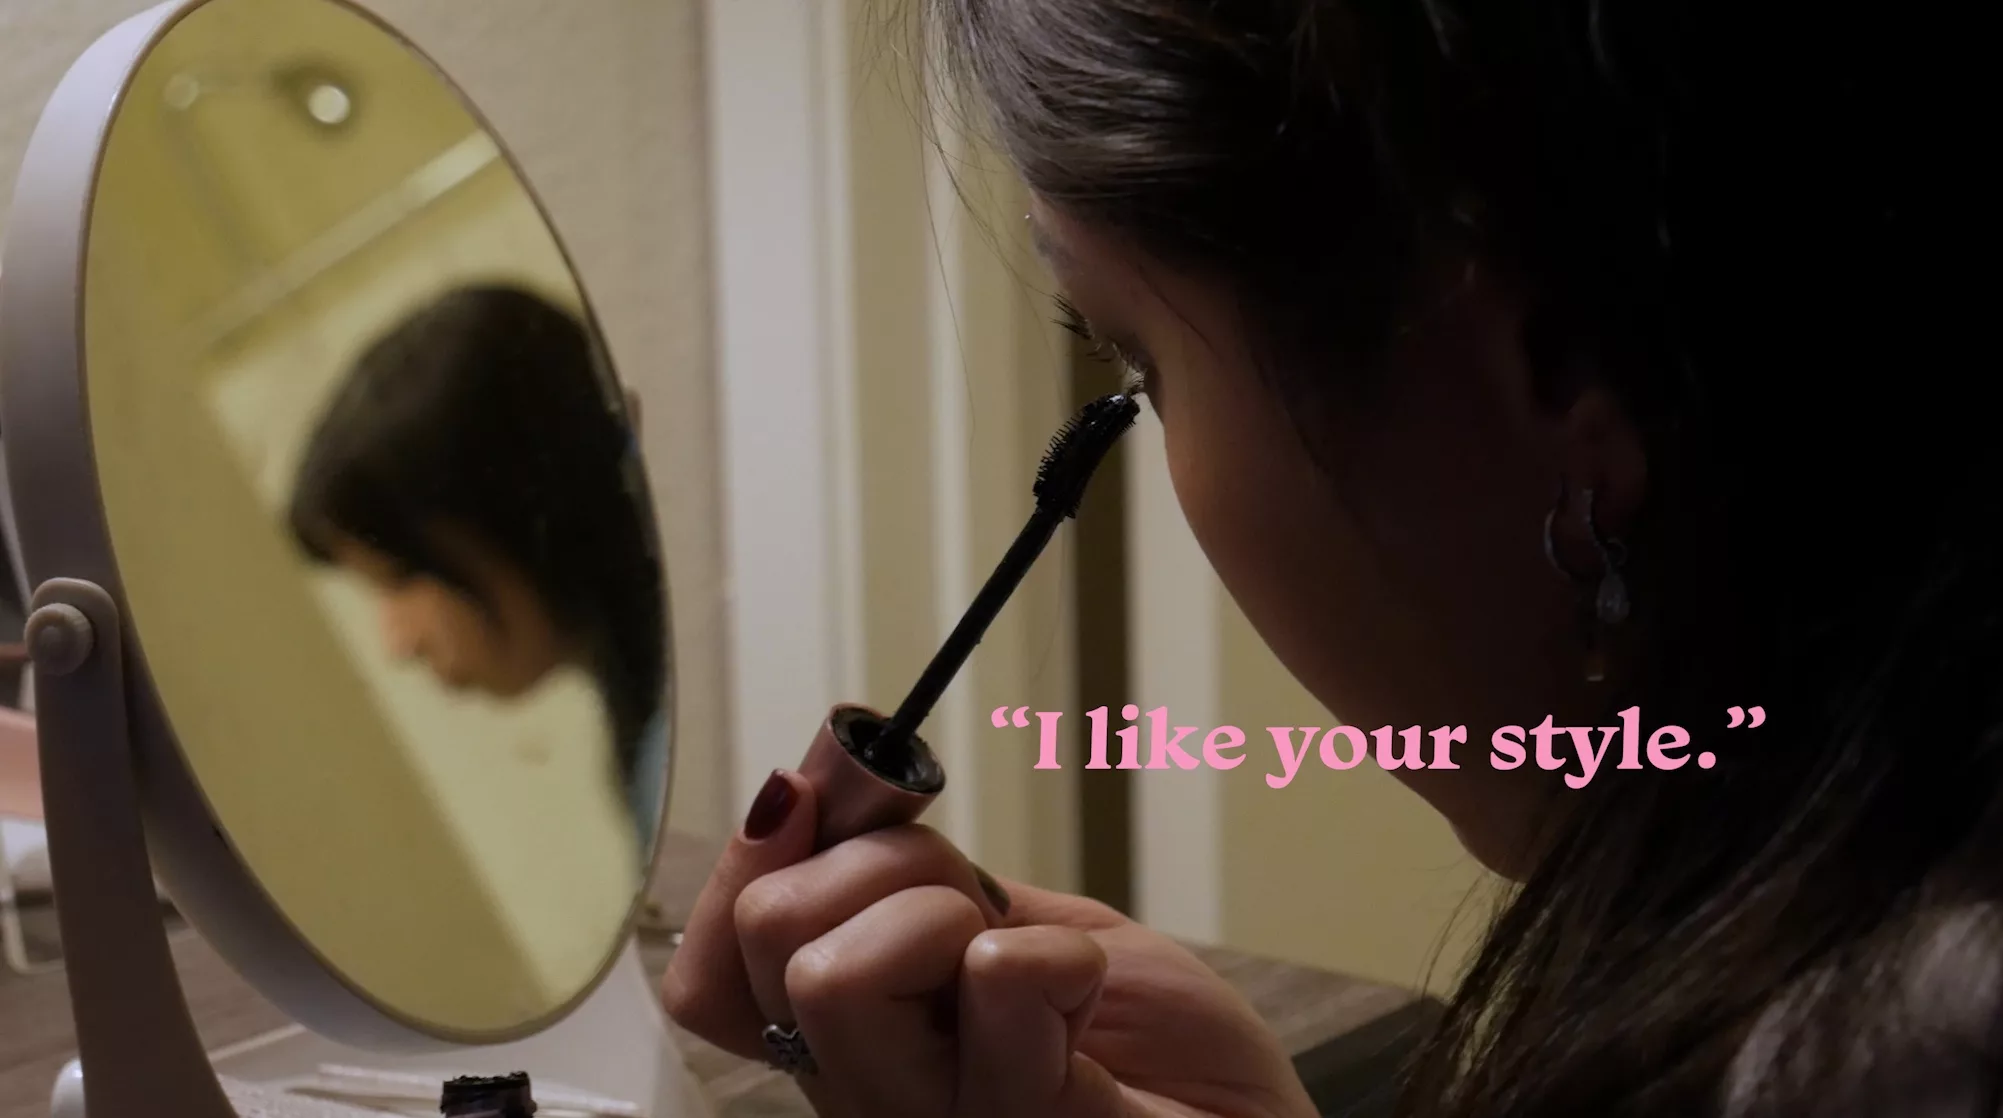 Girl applying mascara as she looks in the mirror